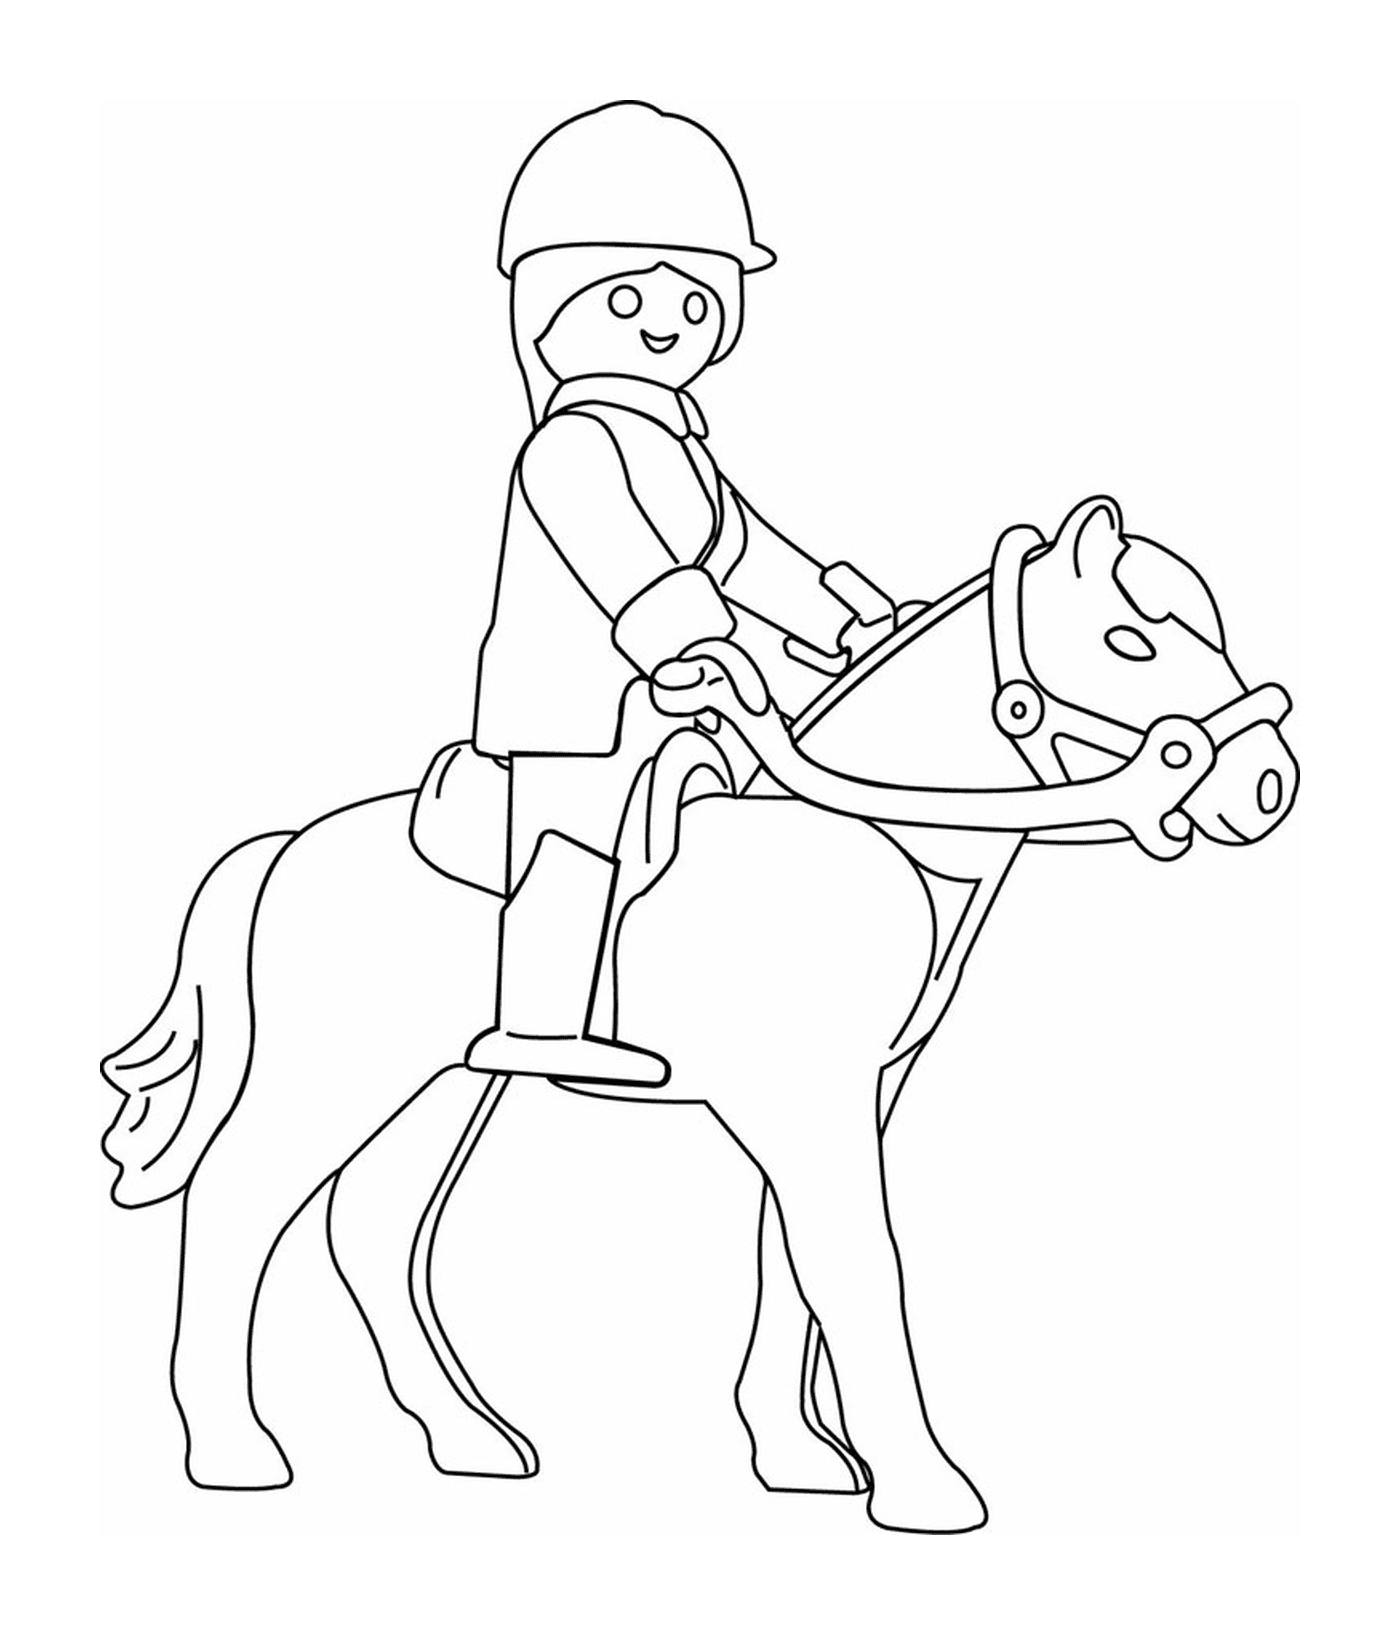  A person on horseback 